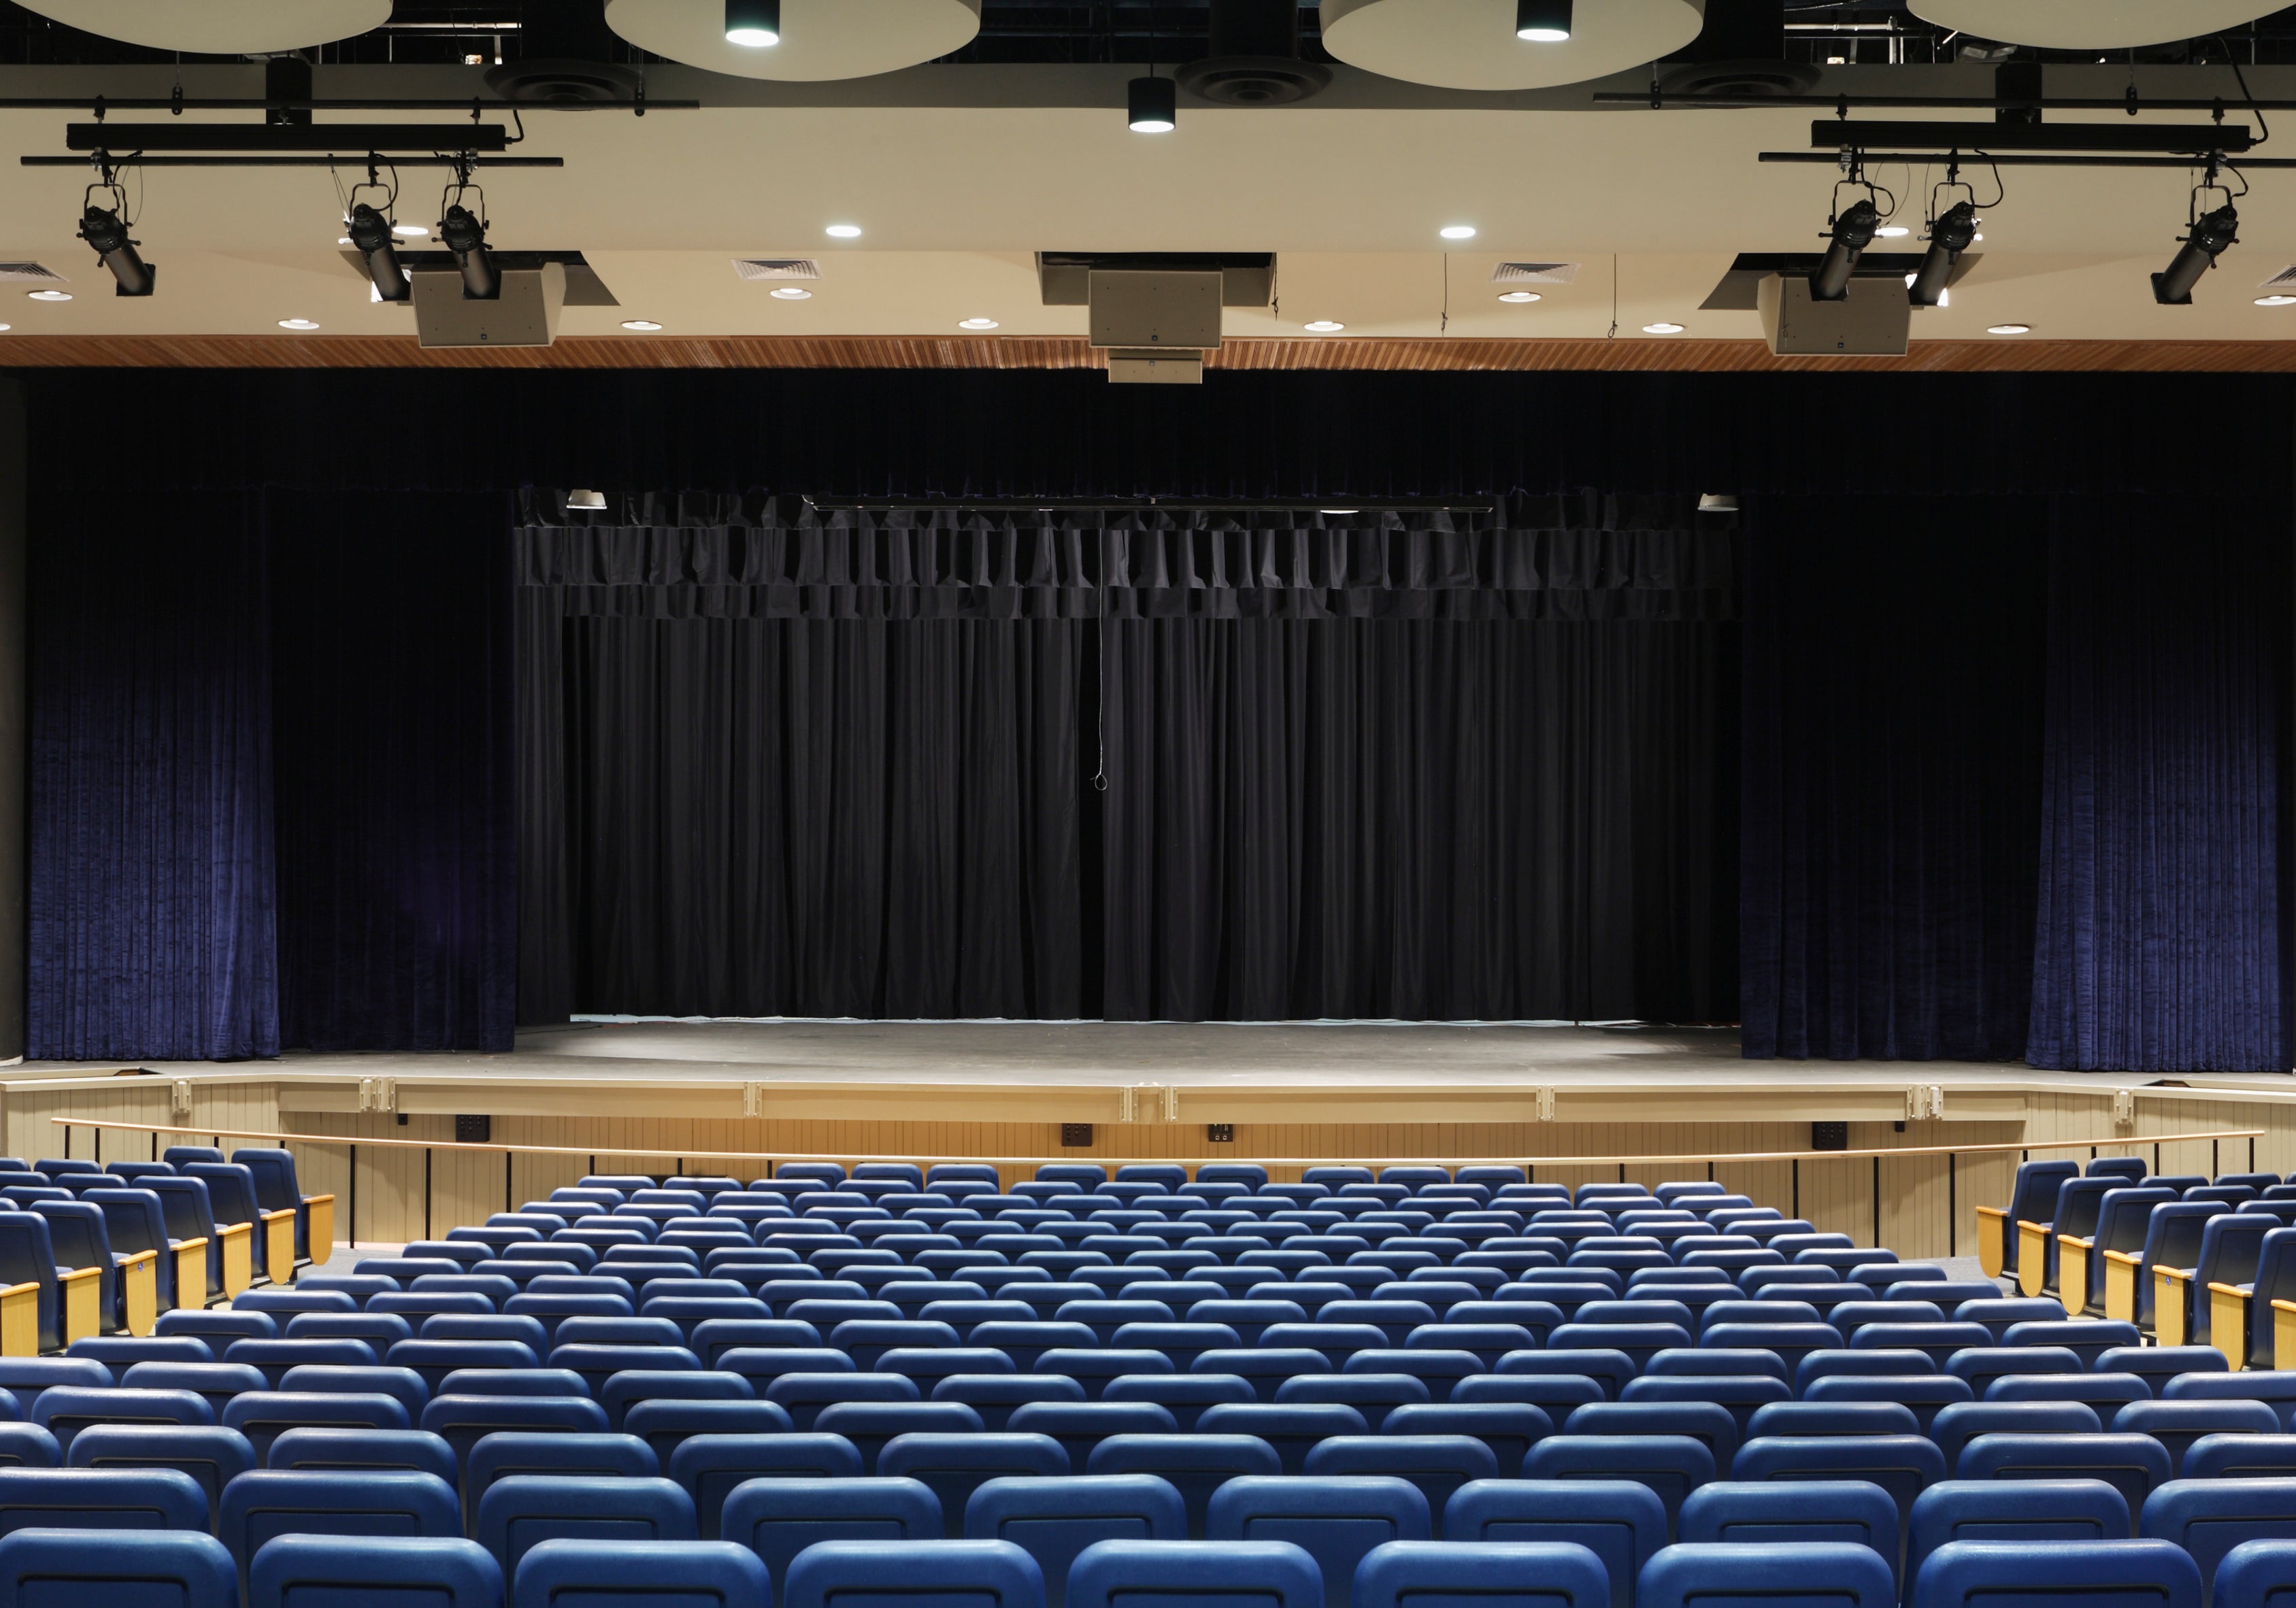 An empty school theater